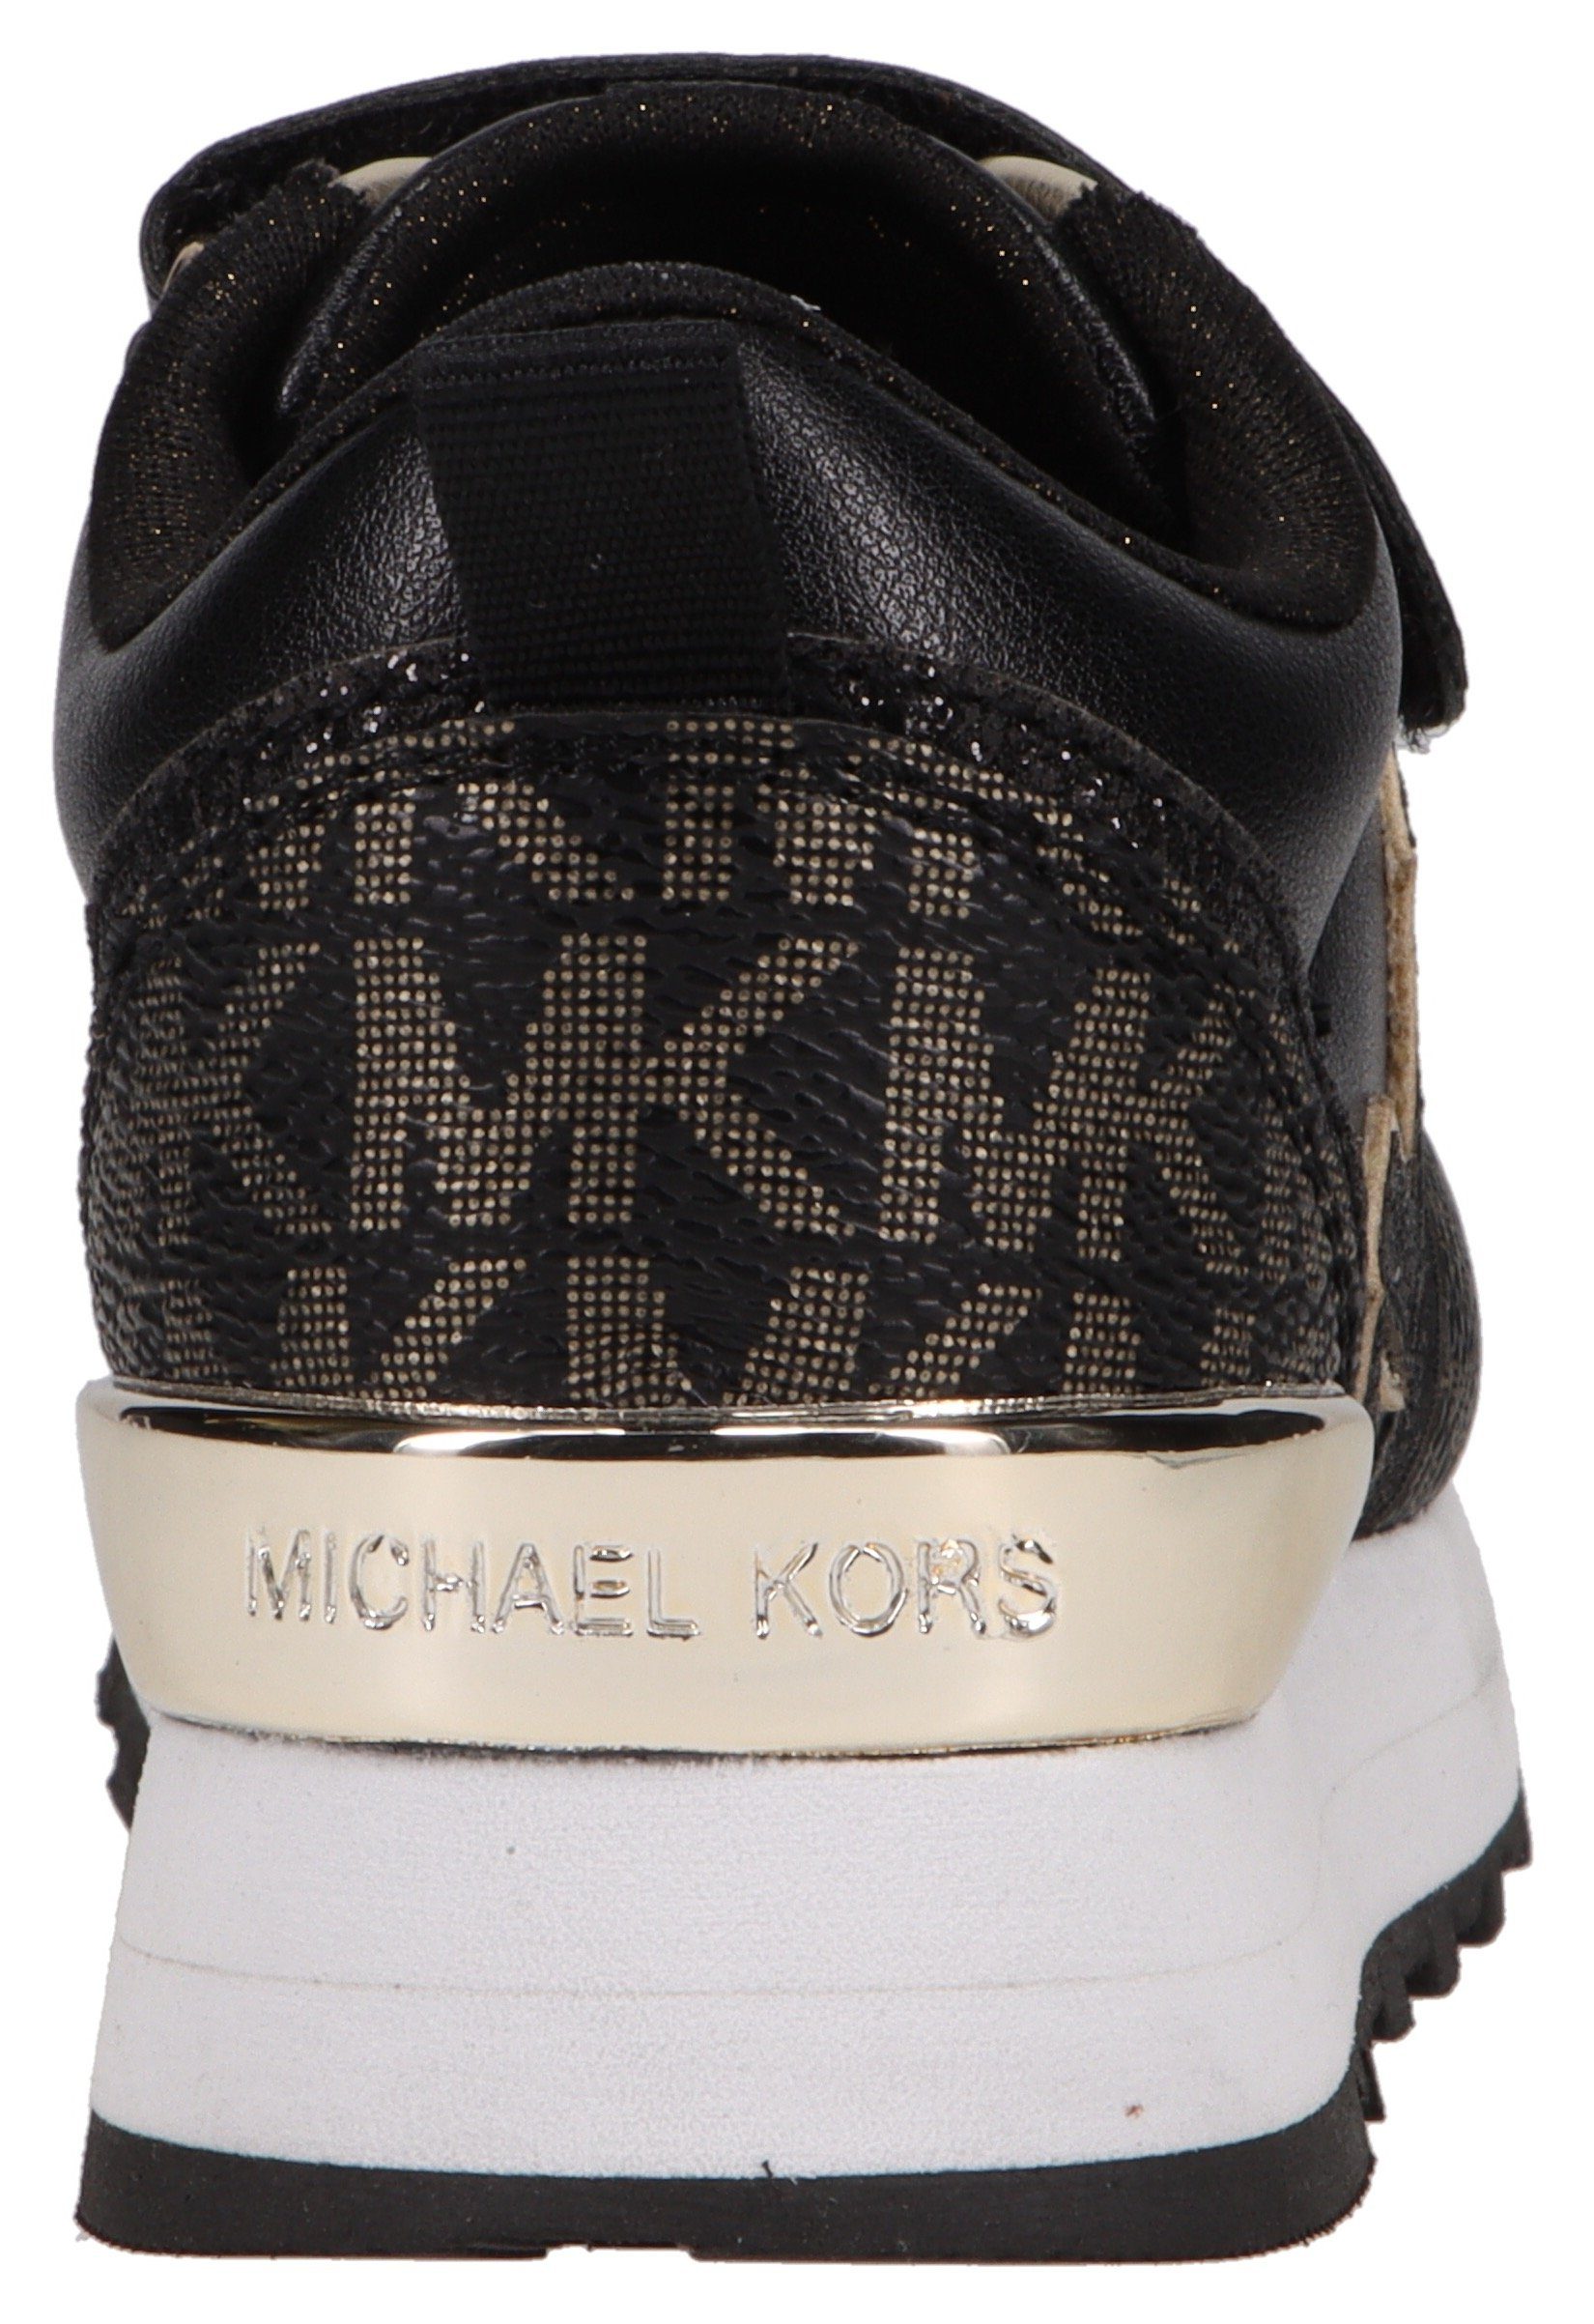 Logoverzierungen DASH MK MICHAEL mit schwarz-goldfarben METALLIC KIDS MIXED KORS Sneaker BILLIE